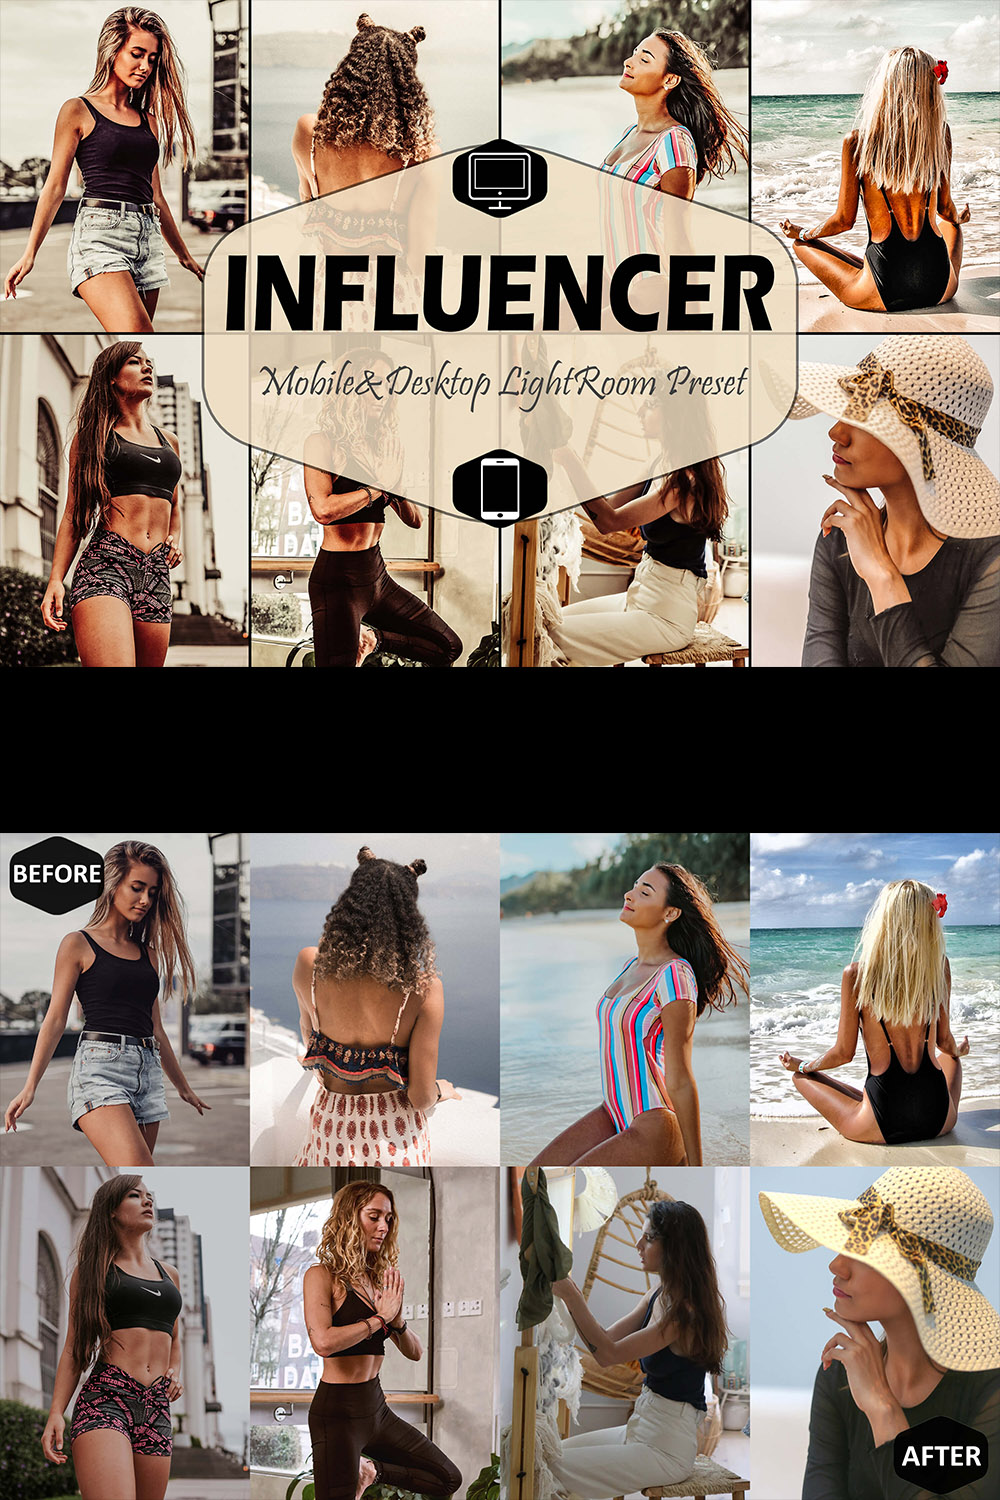 10 Influencer Mobile & Desktop Lightroom Presets, tan LR preset, Portrait Trendy Filter, DNG photographer blogger Lifestyle Instagram Theme pinterest preview image.